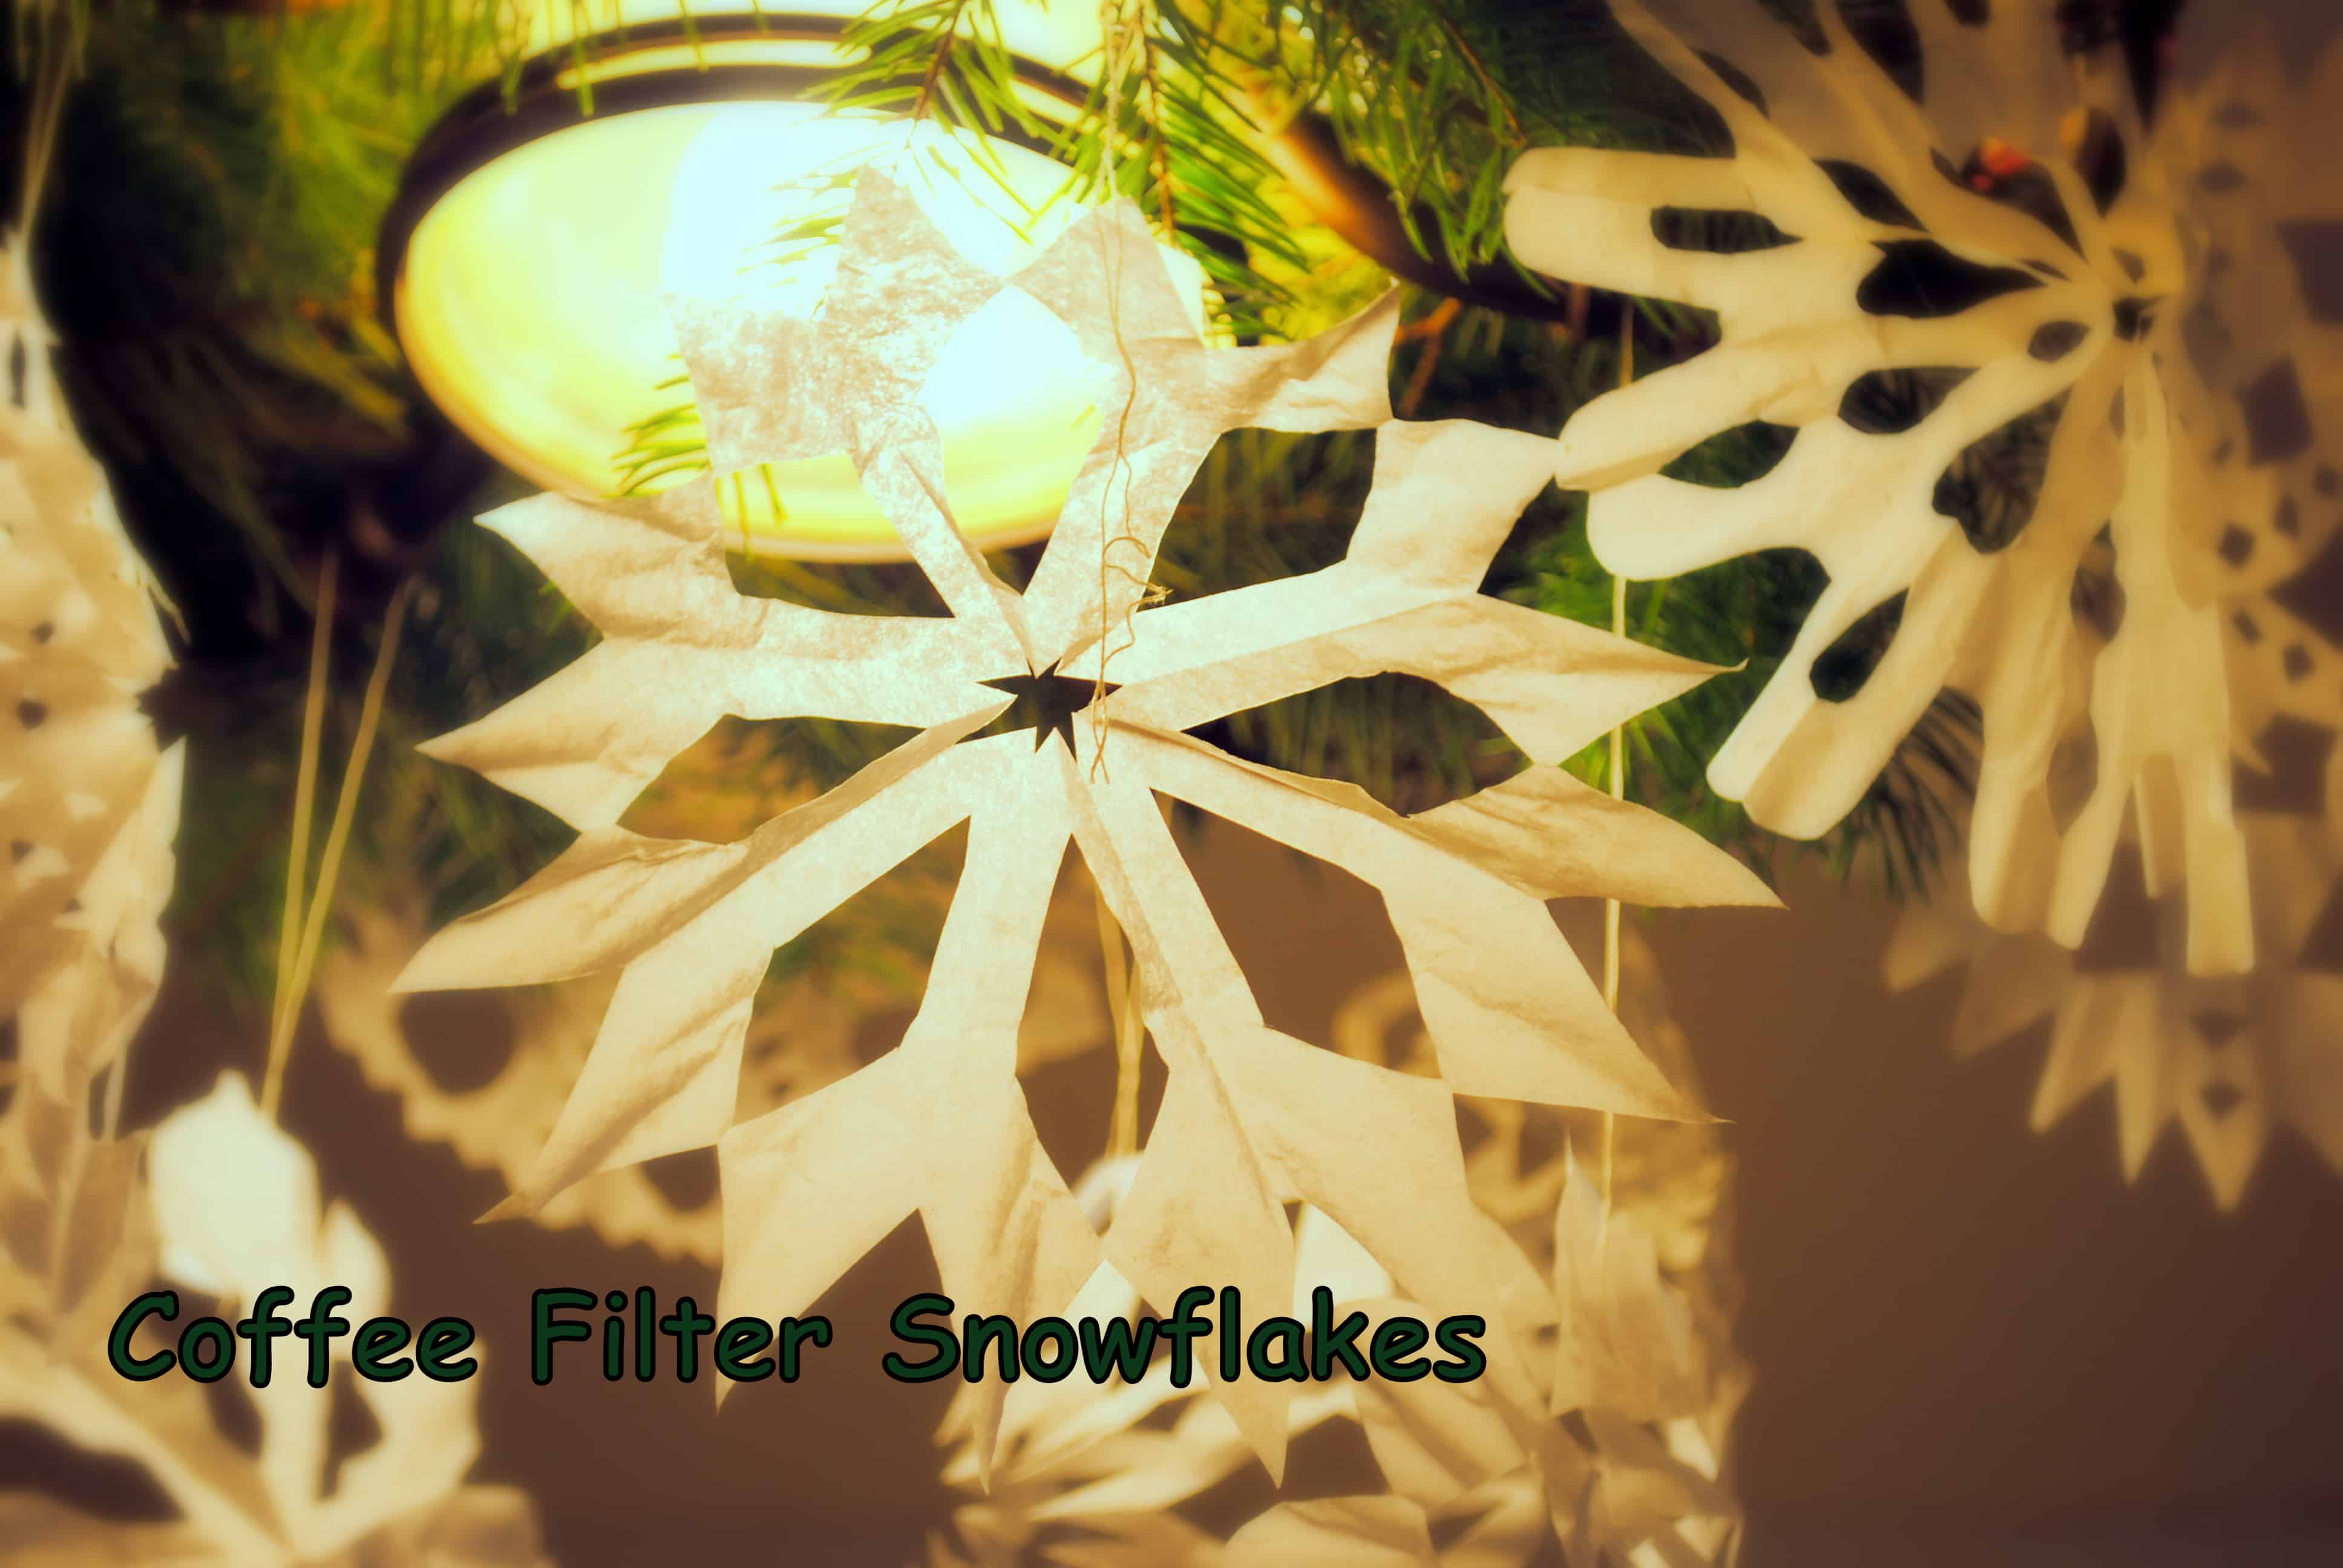 Coffee filter snowflakes